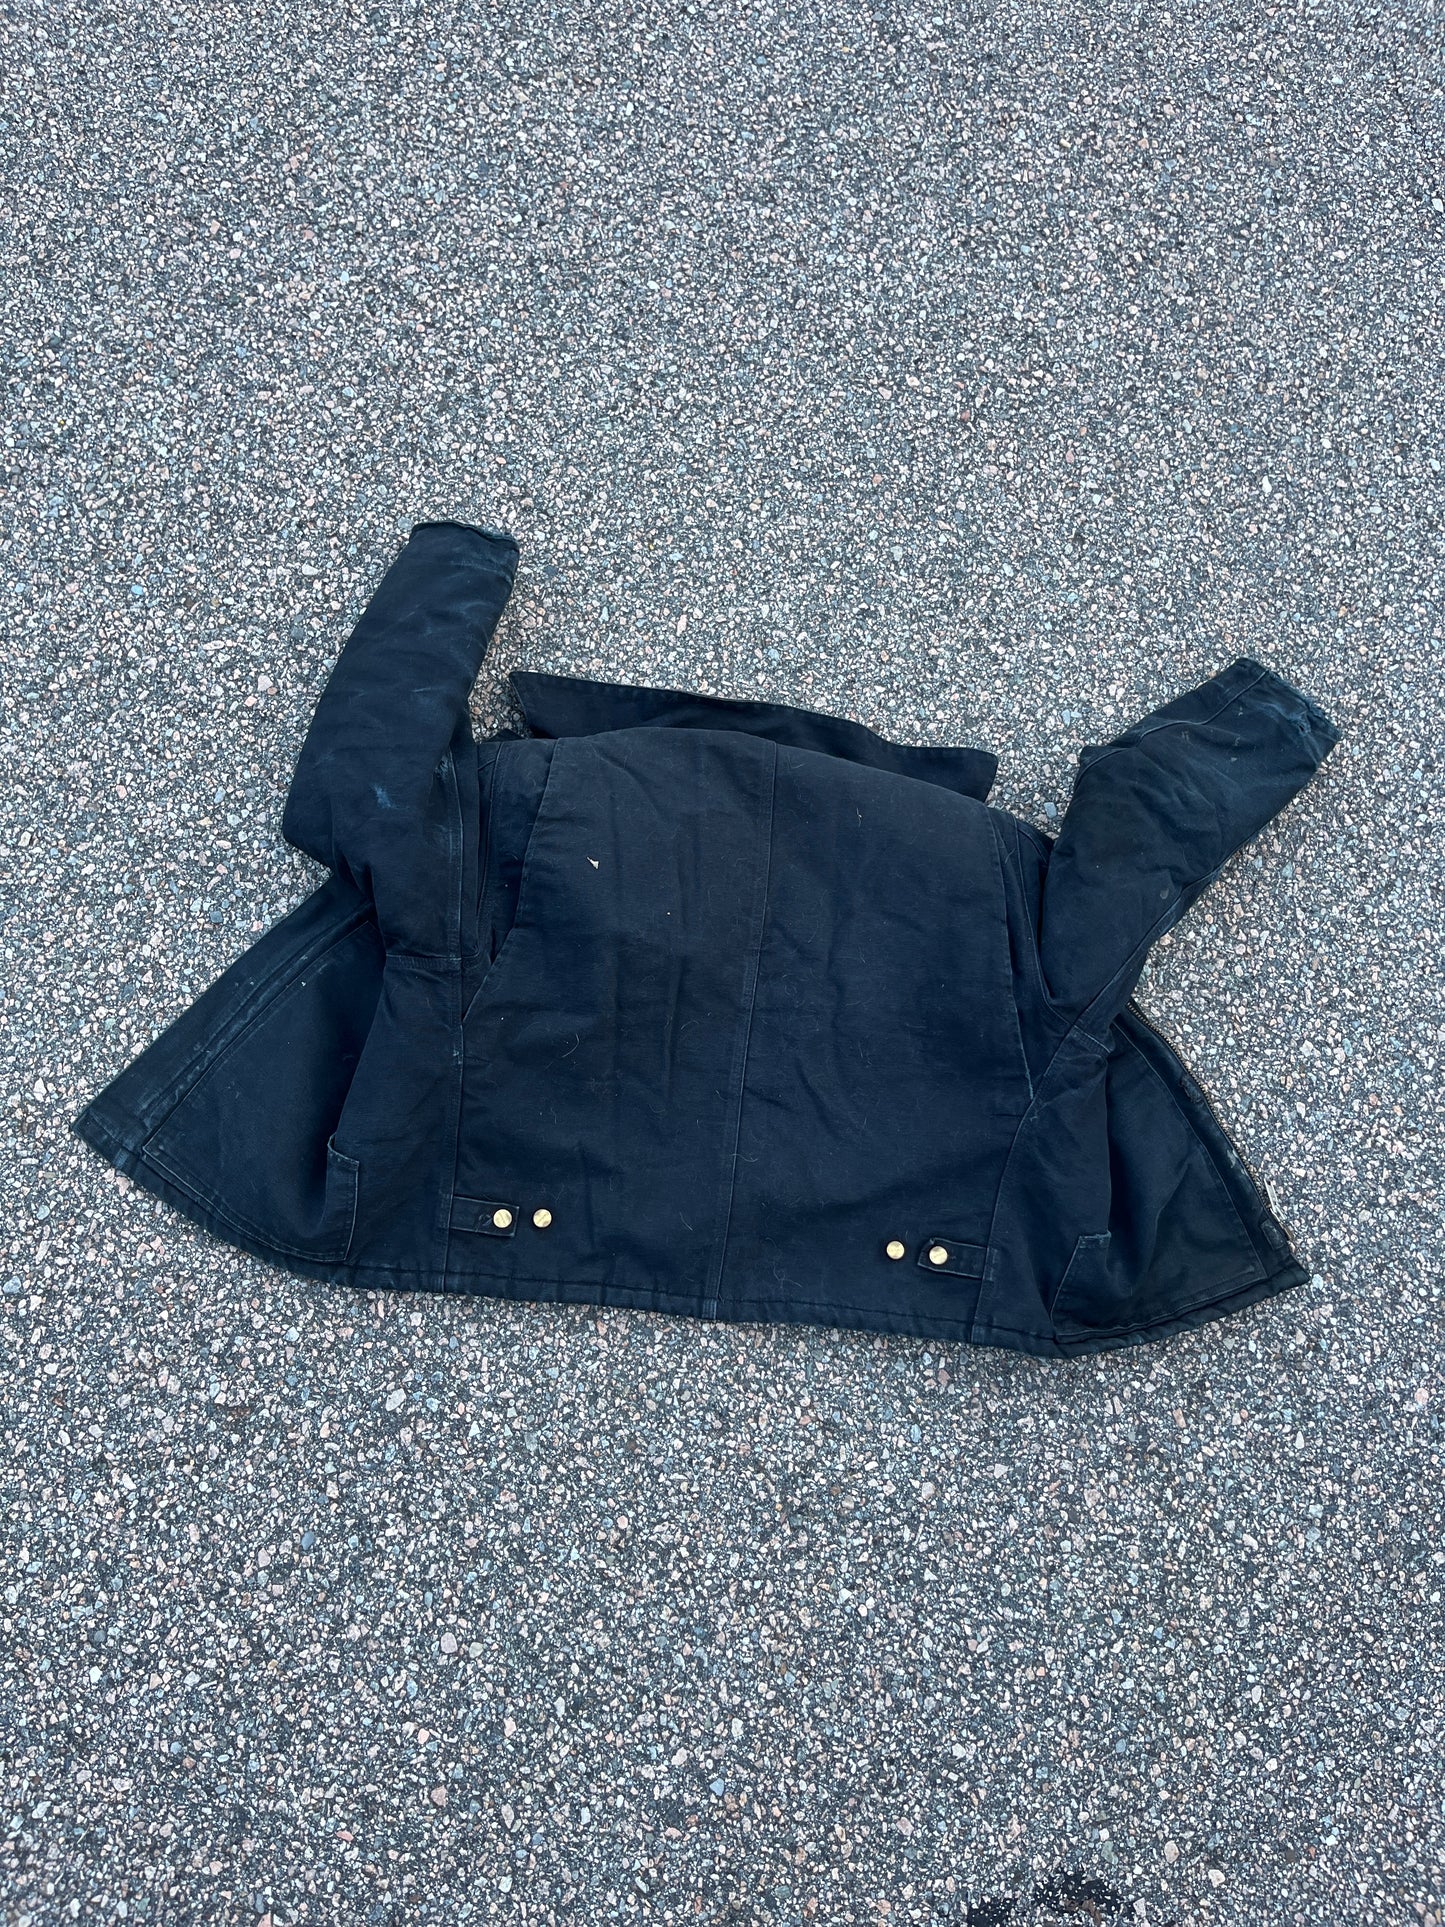 Faded Black Carhartt Arctic Jacket - Medium